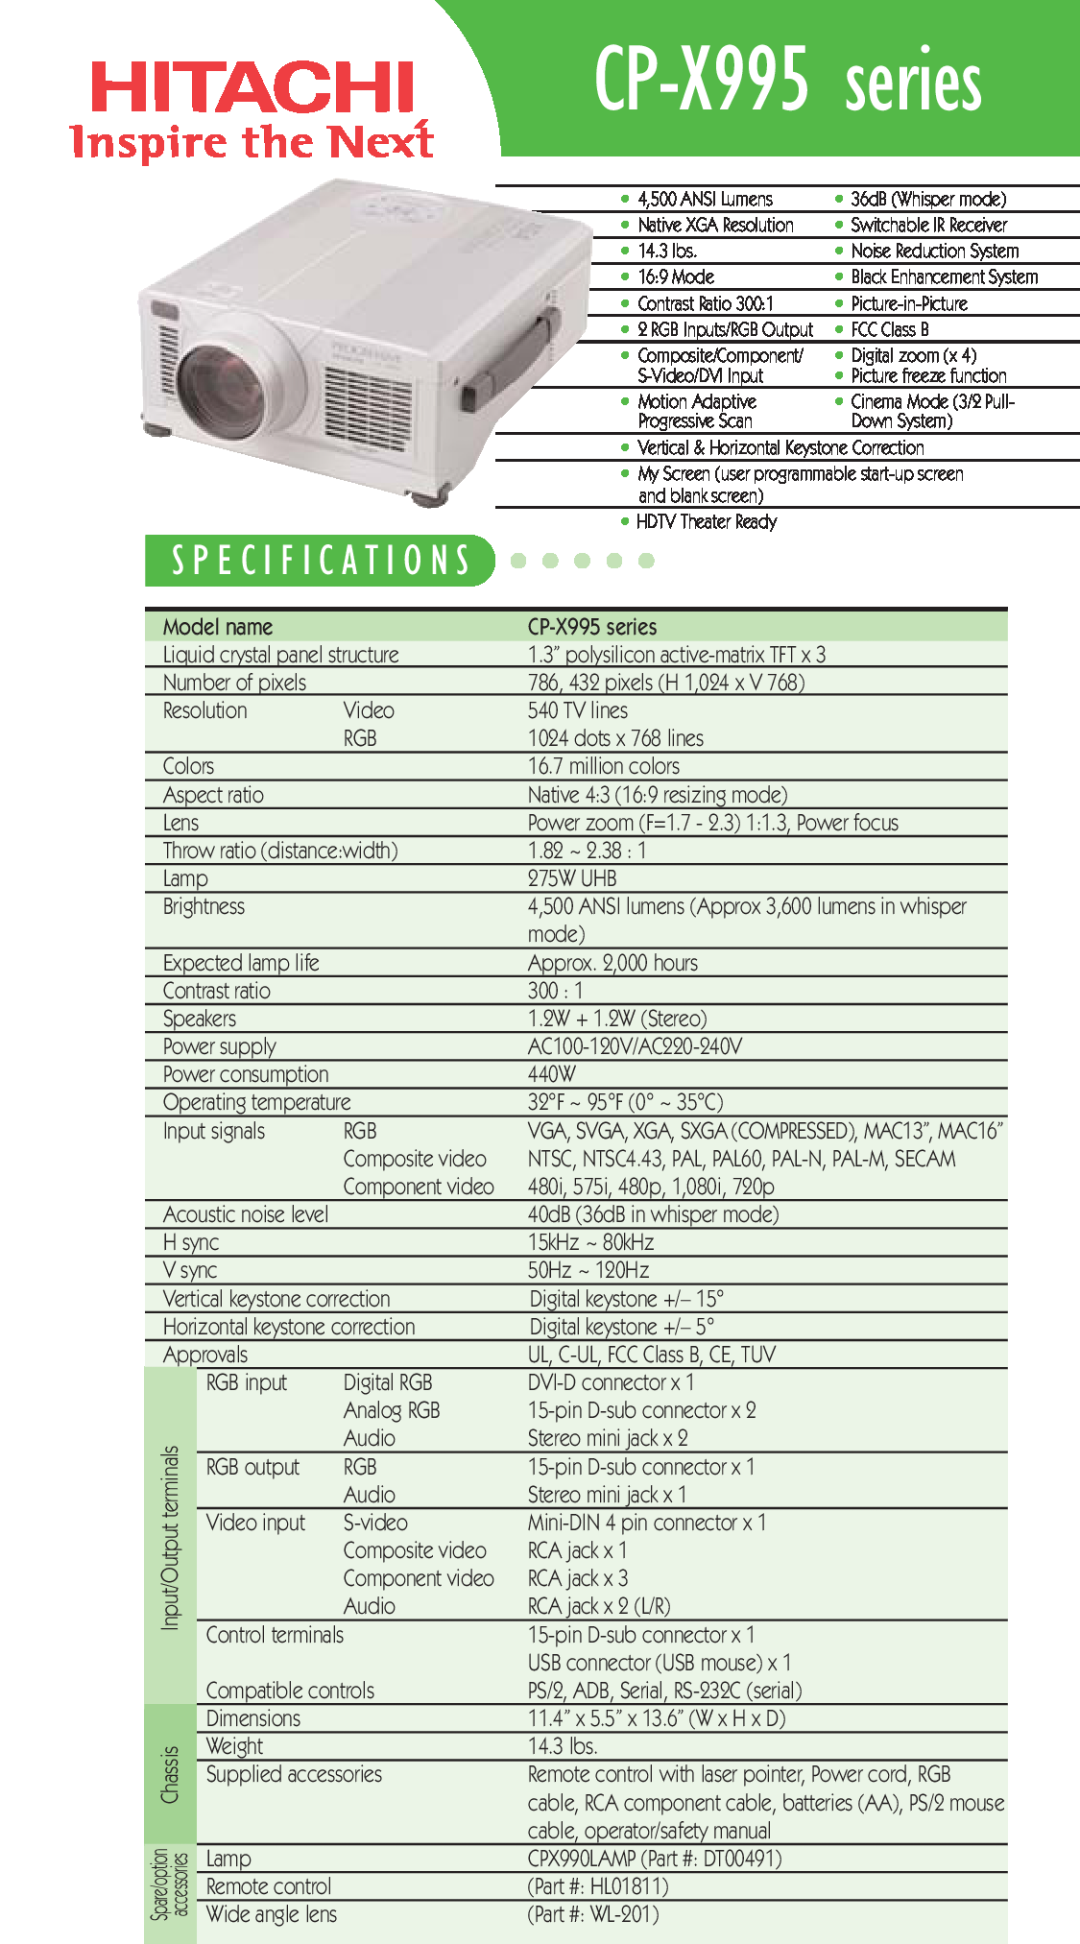 Hitachi CP-X995 specifications series, S P E C I F I C A T I O N S 